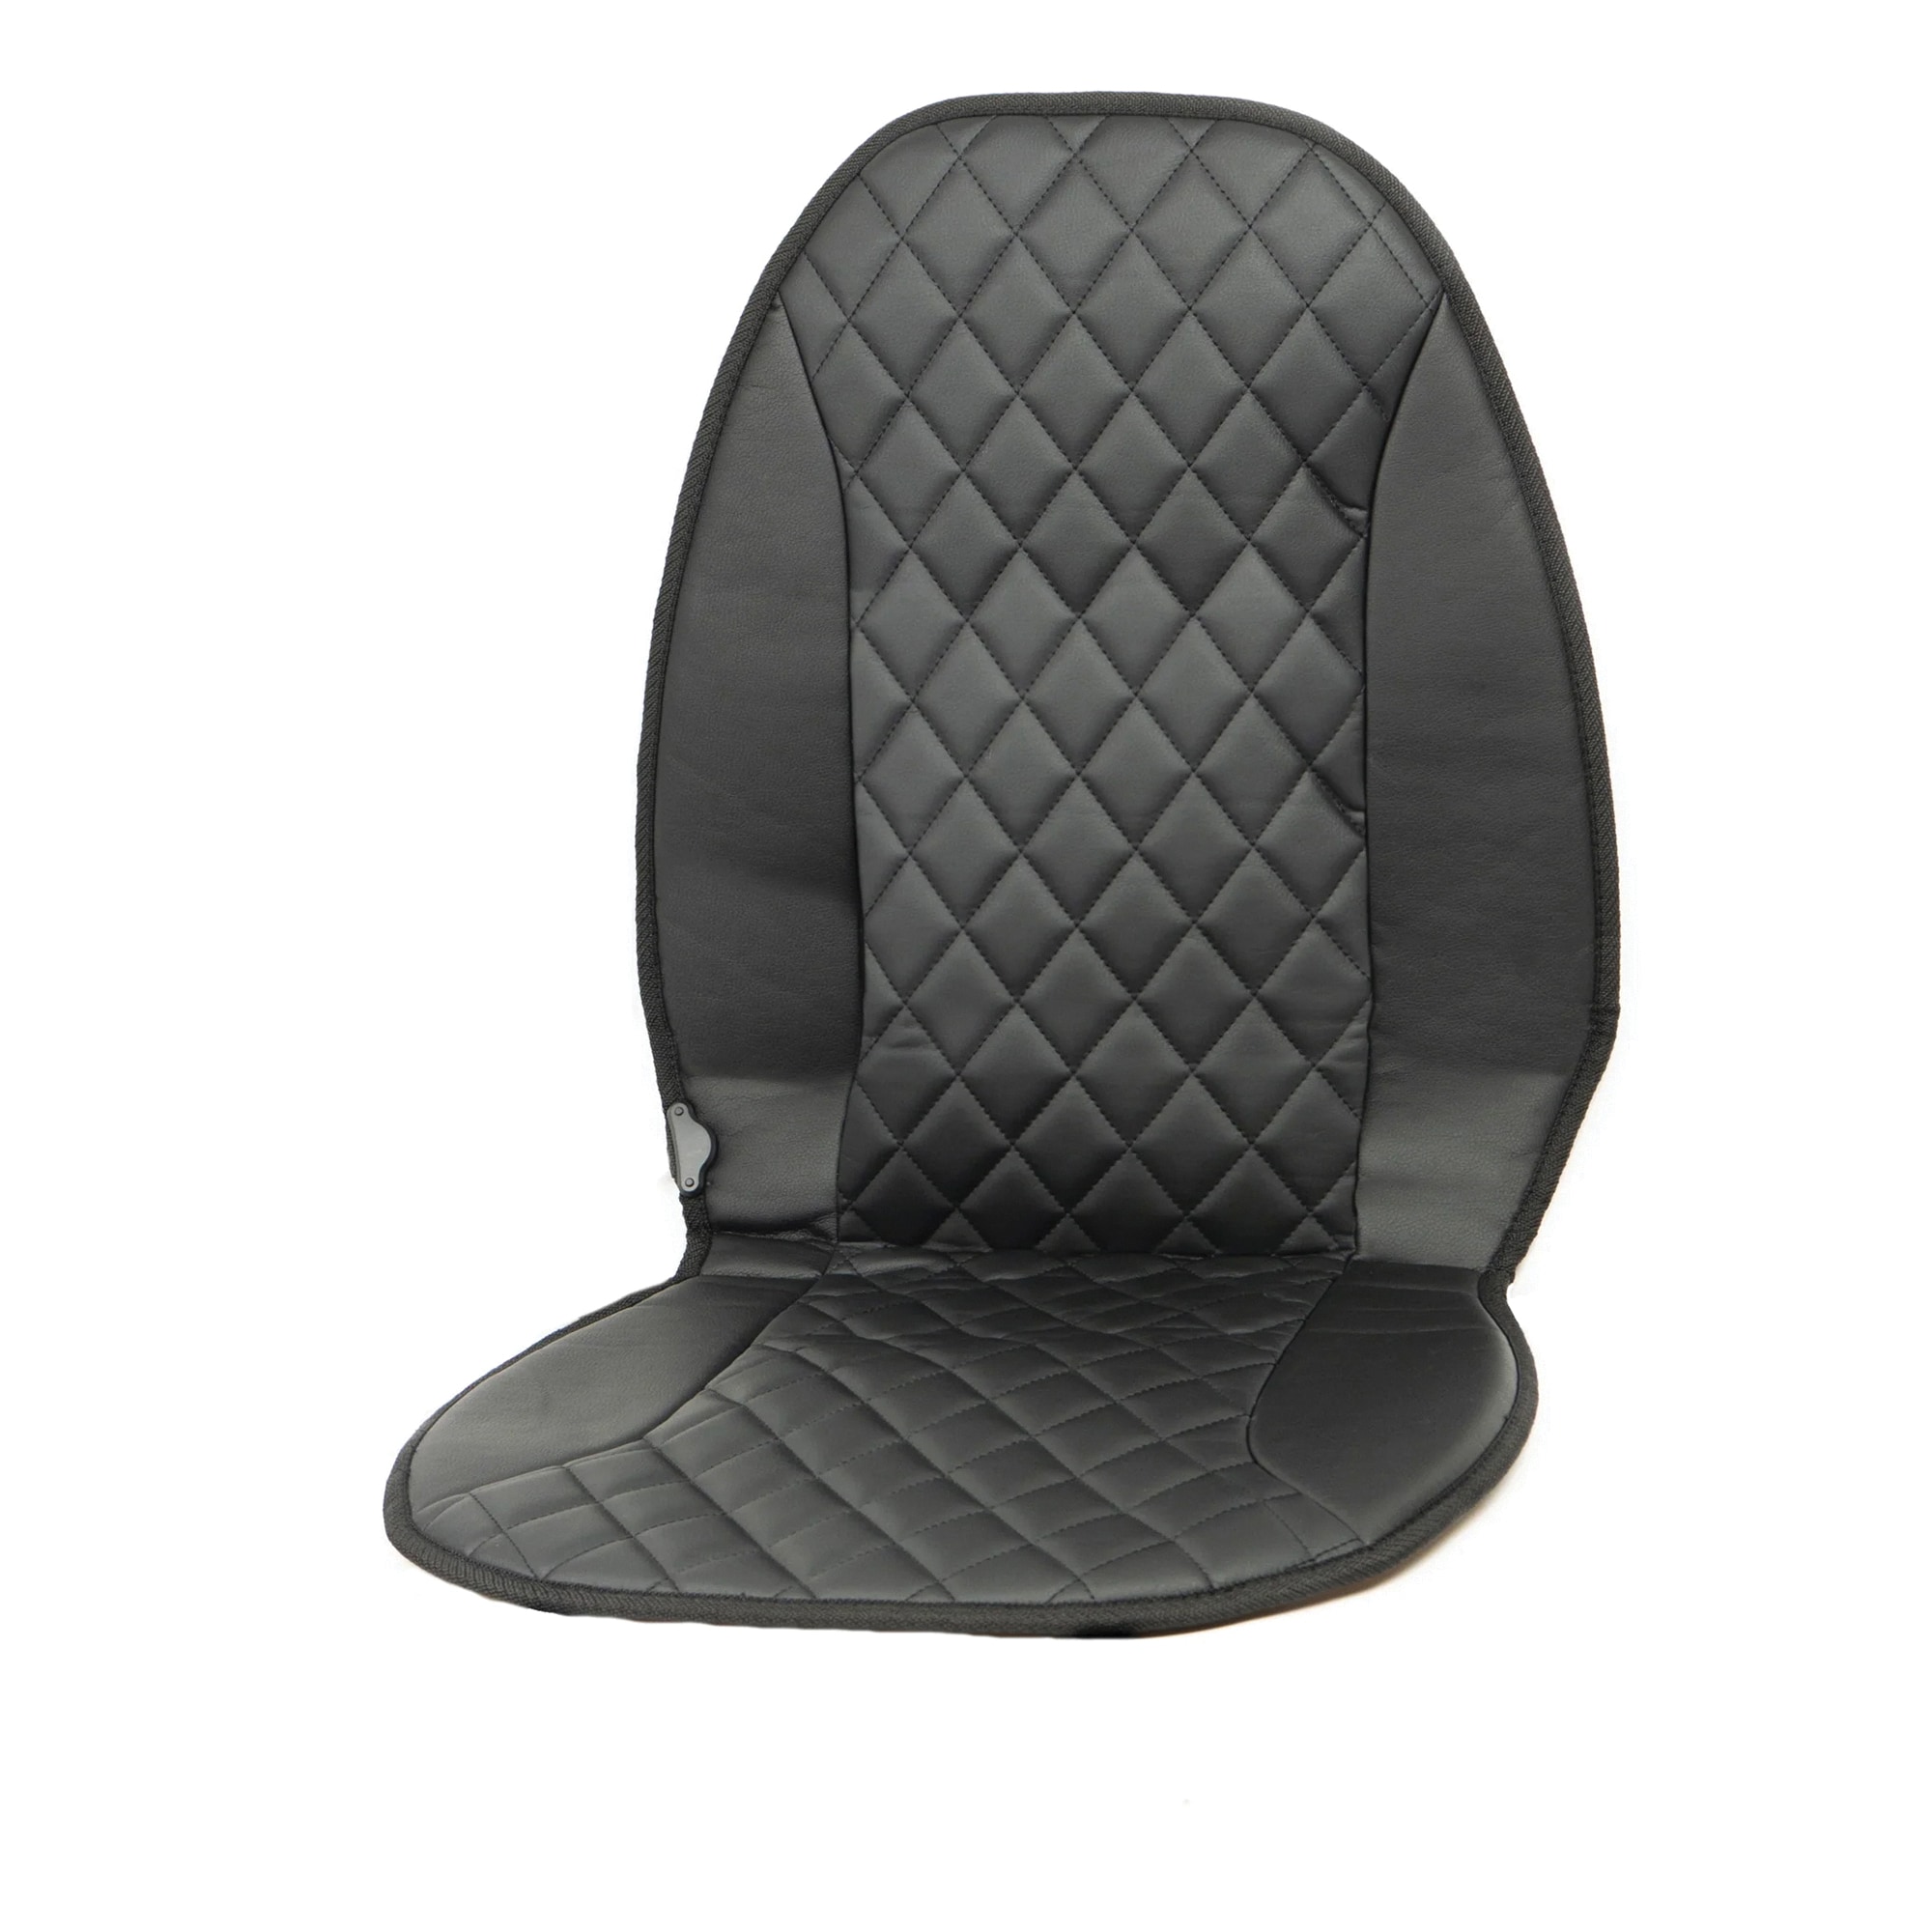 Seat cushion Automotive at